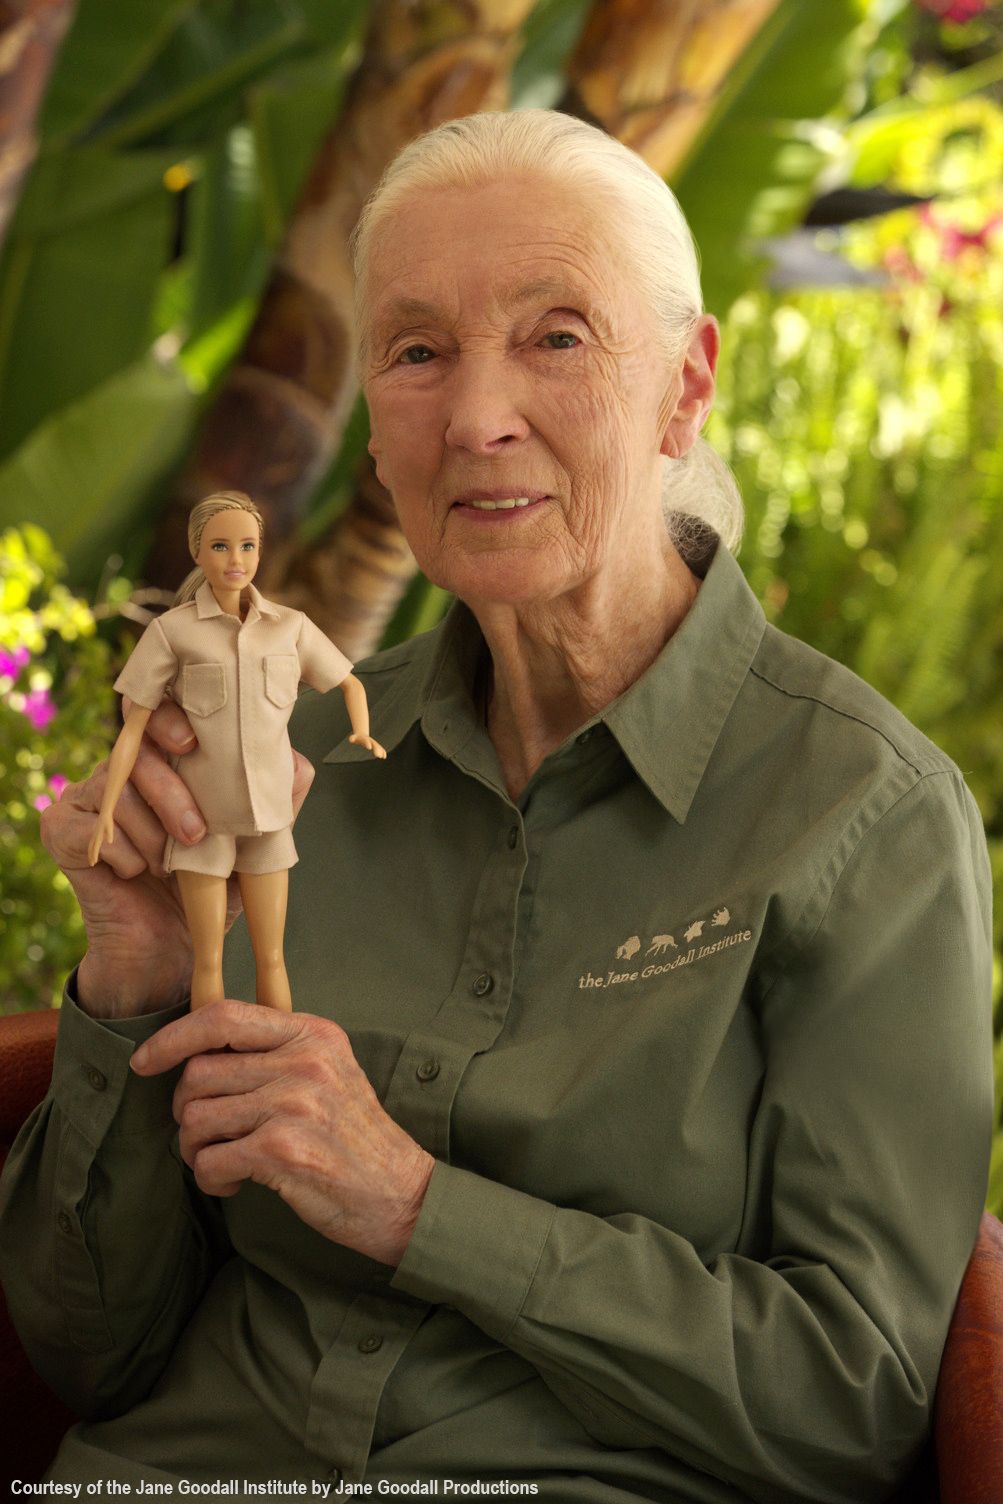 Jane Goodall Gets Her Own Barbie;

Credit: Courtesy of the Jane Goodall Institute;

https://app.asana.com/0/1202556224425358/1202583992409132/f